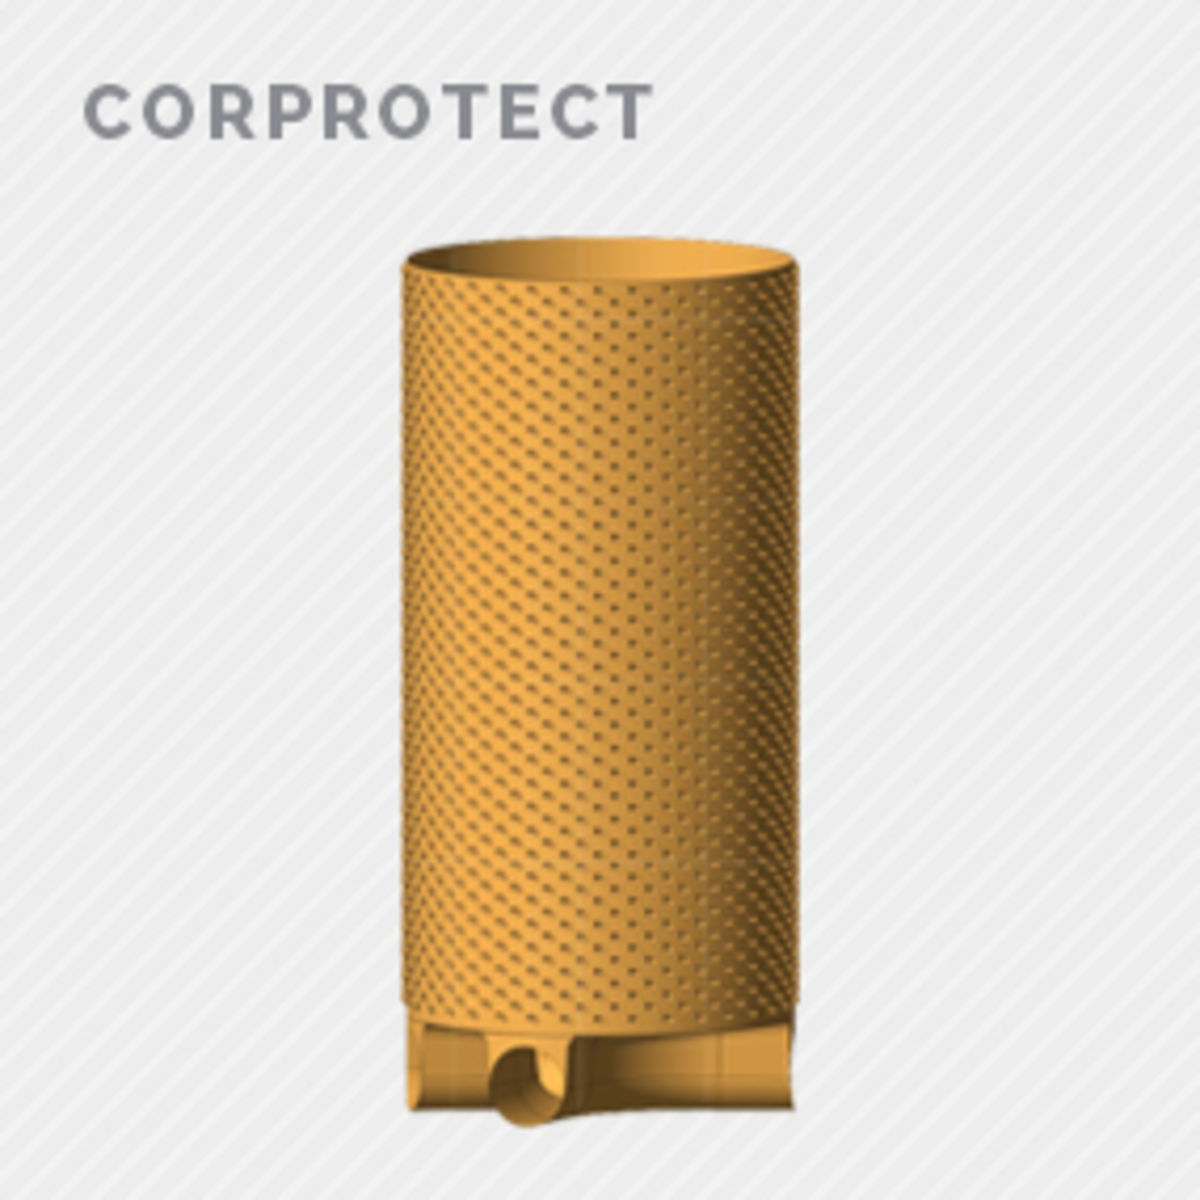 Corprotect product Folder